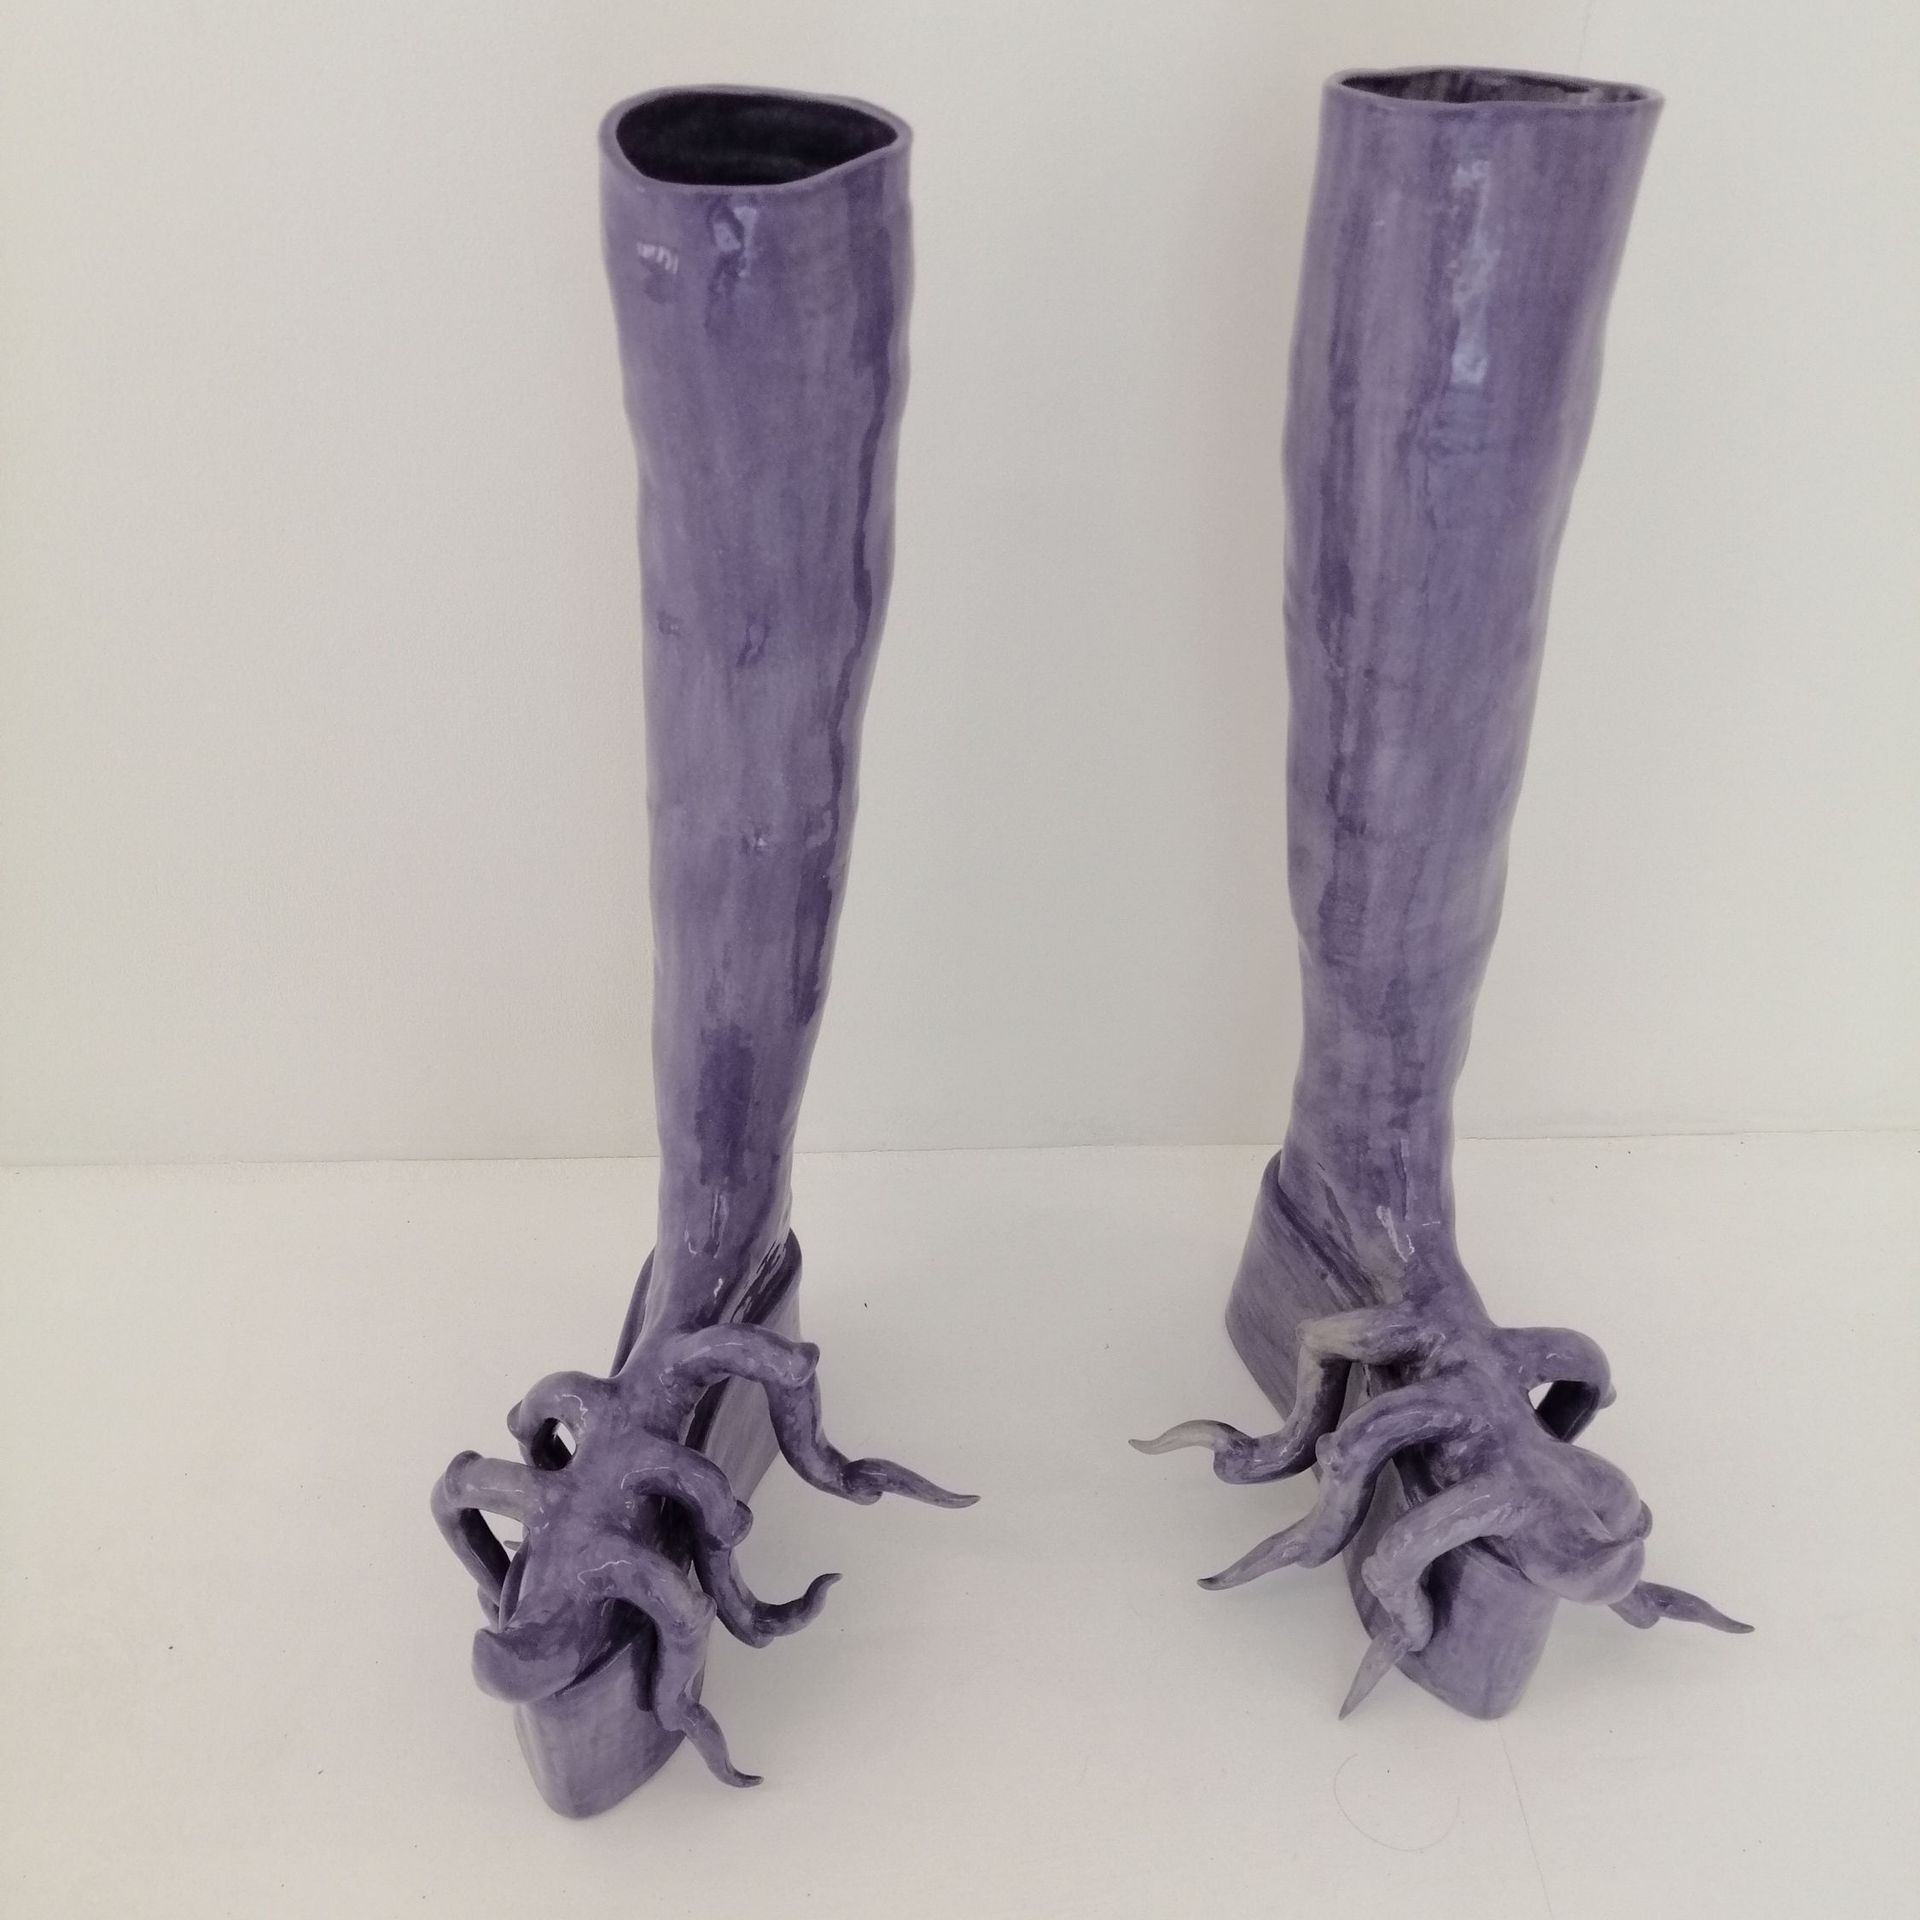 Naomi Gilon, "Spring assortment: Lilac Bag/Platform thigh-high boots", 2021 